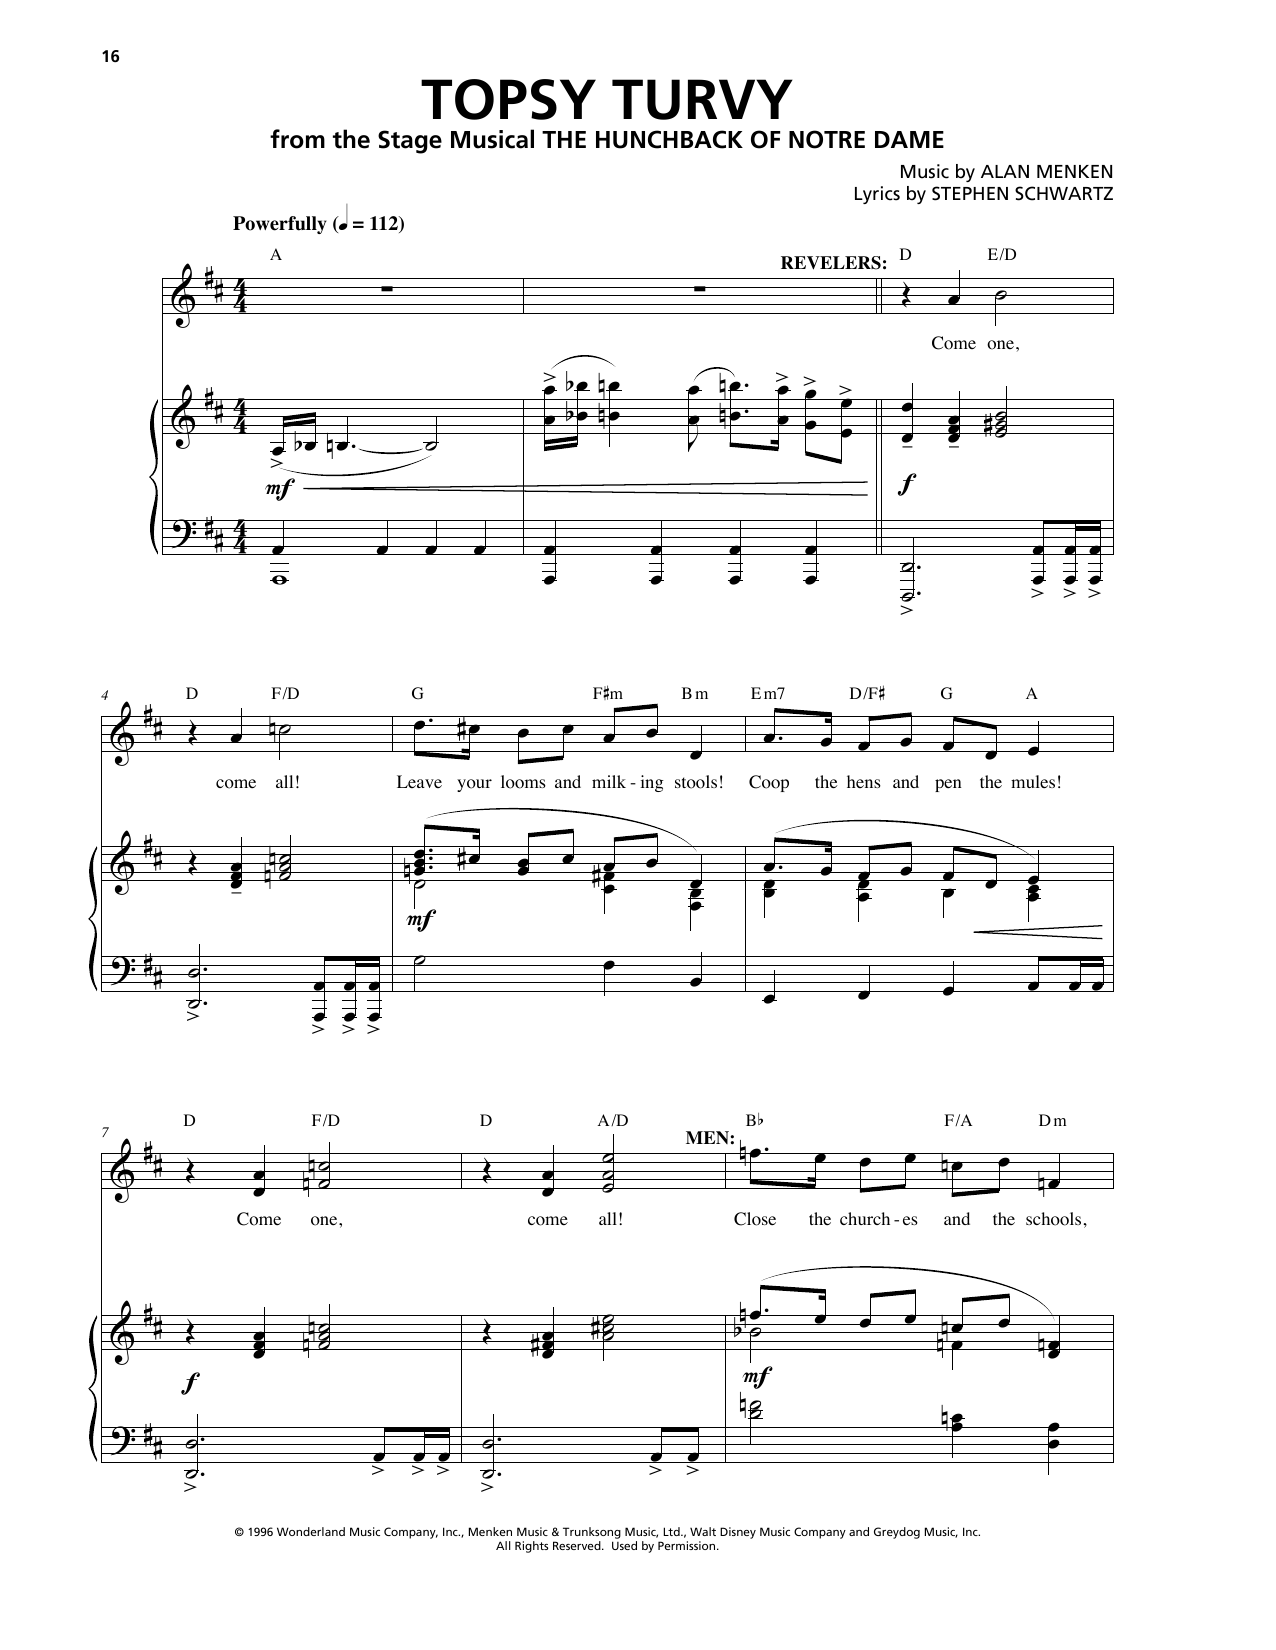 Alan Menken Topsy Turvy (Topsy Turvy Part 2) Sheet Music Notes & Chords for Piano & Vocal - Download or Print PDF